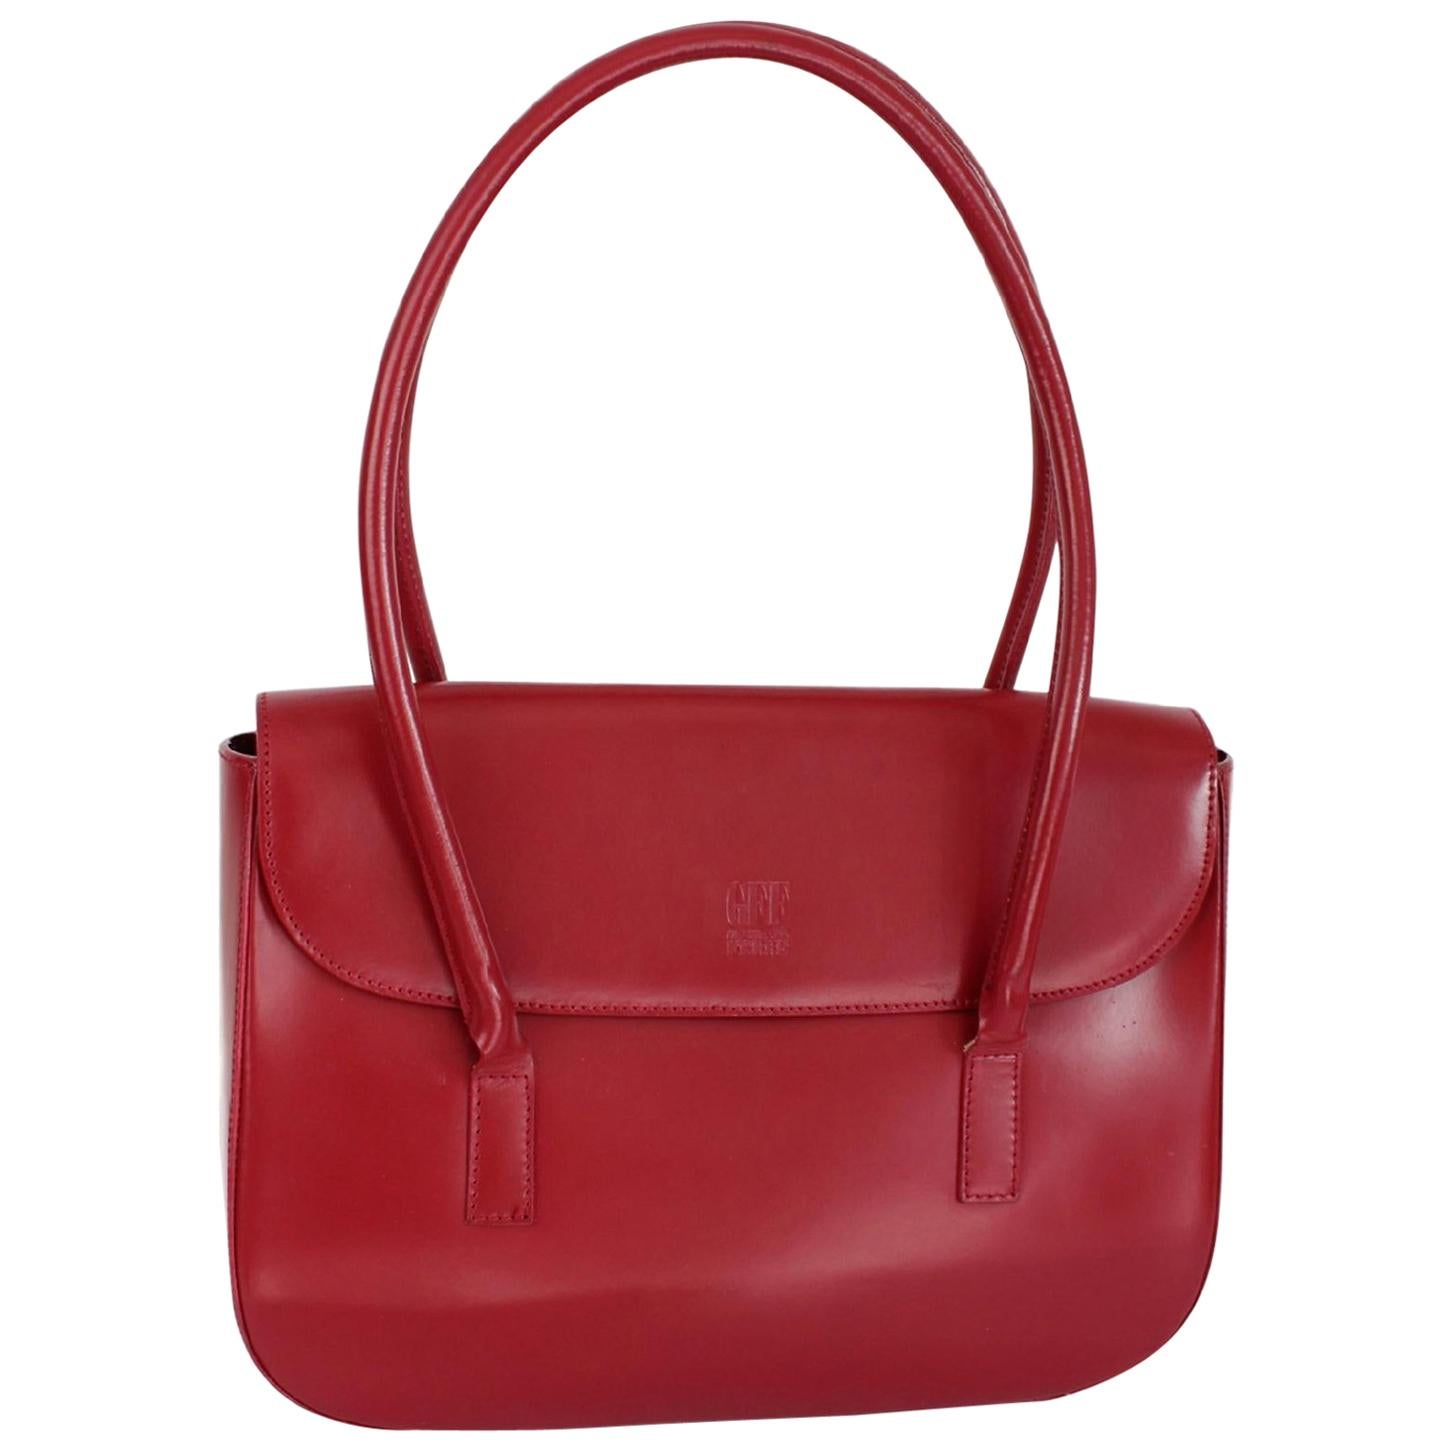 Gianfranco Ferrè Shoulder Tote Bag Patient Leather Vintage Red, 1970s